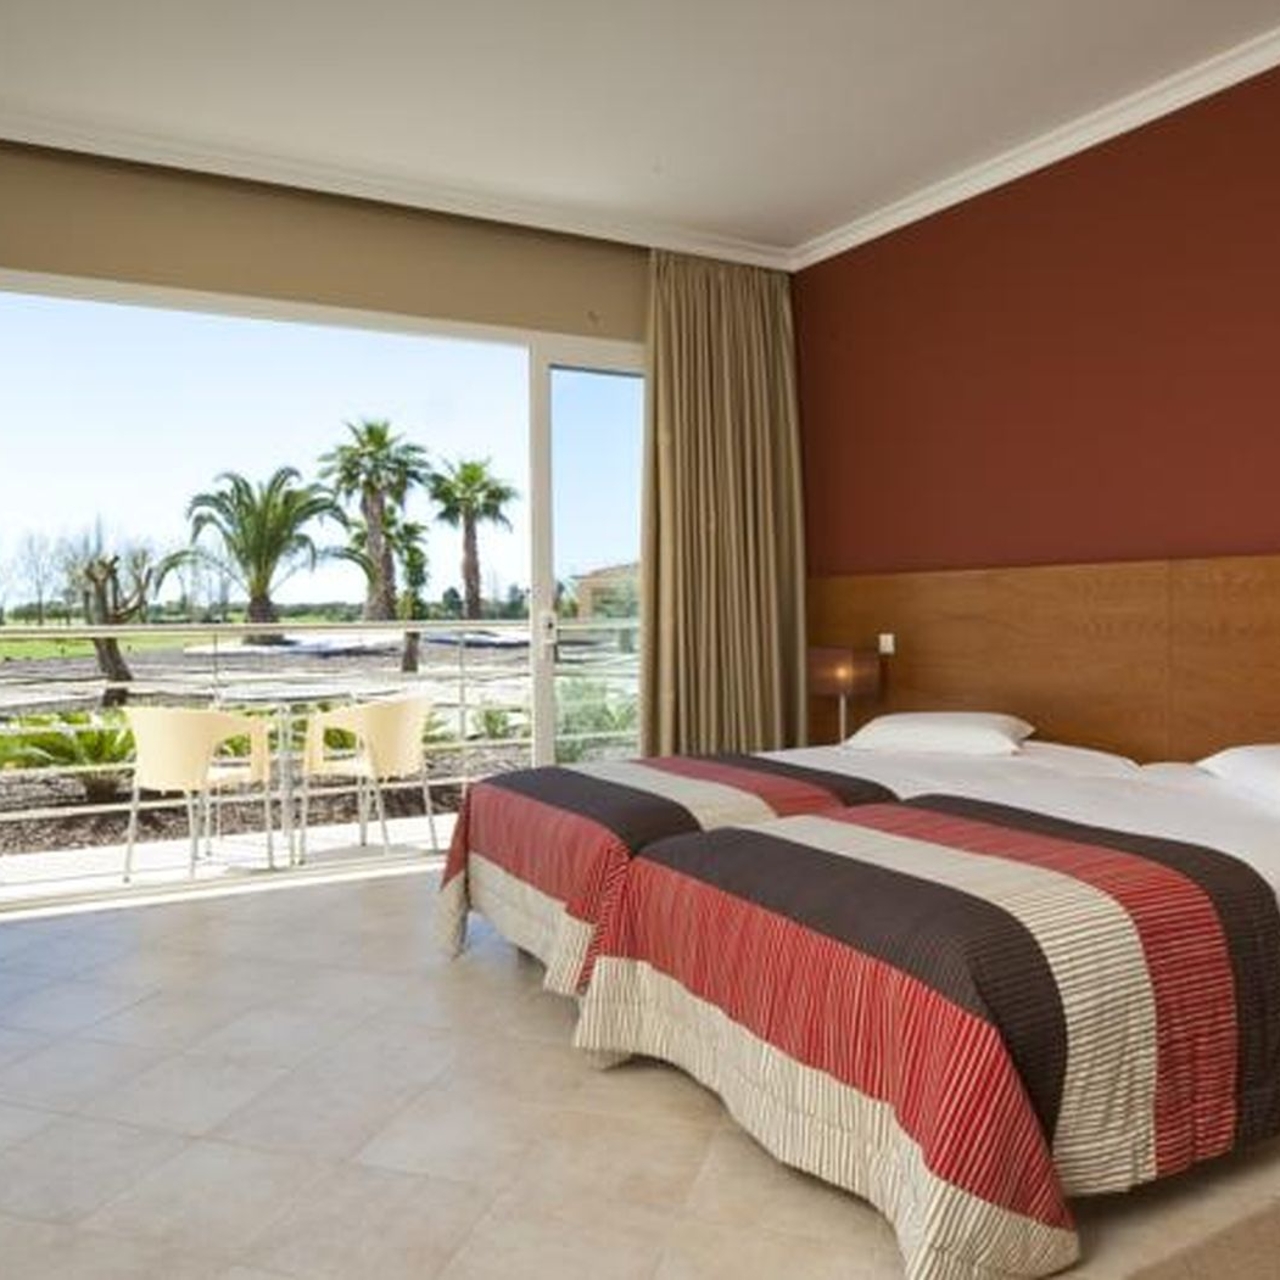 Montado Hotel & Golf Resort - 4 HRS star hotel in Palmela (Setúbal)